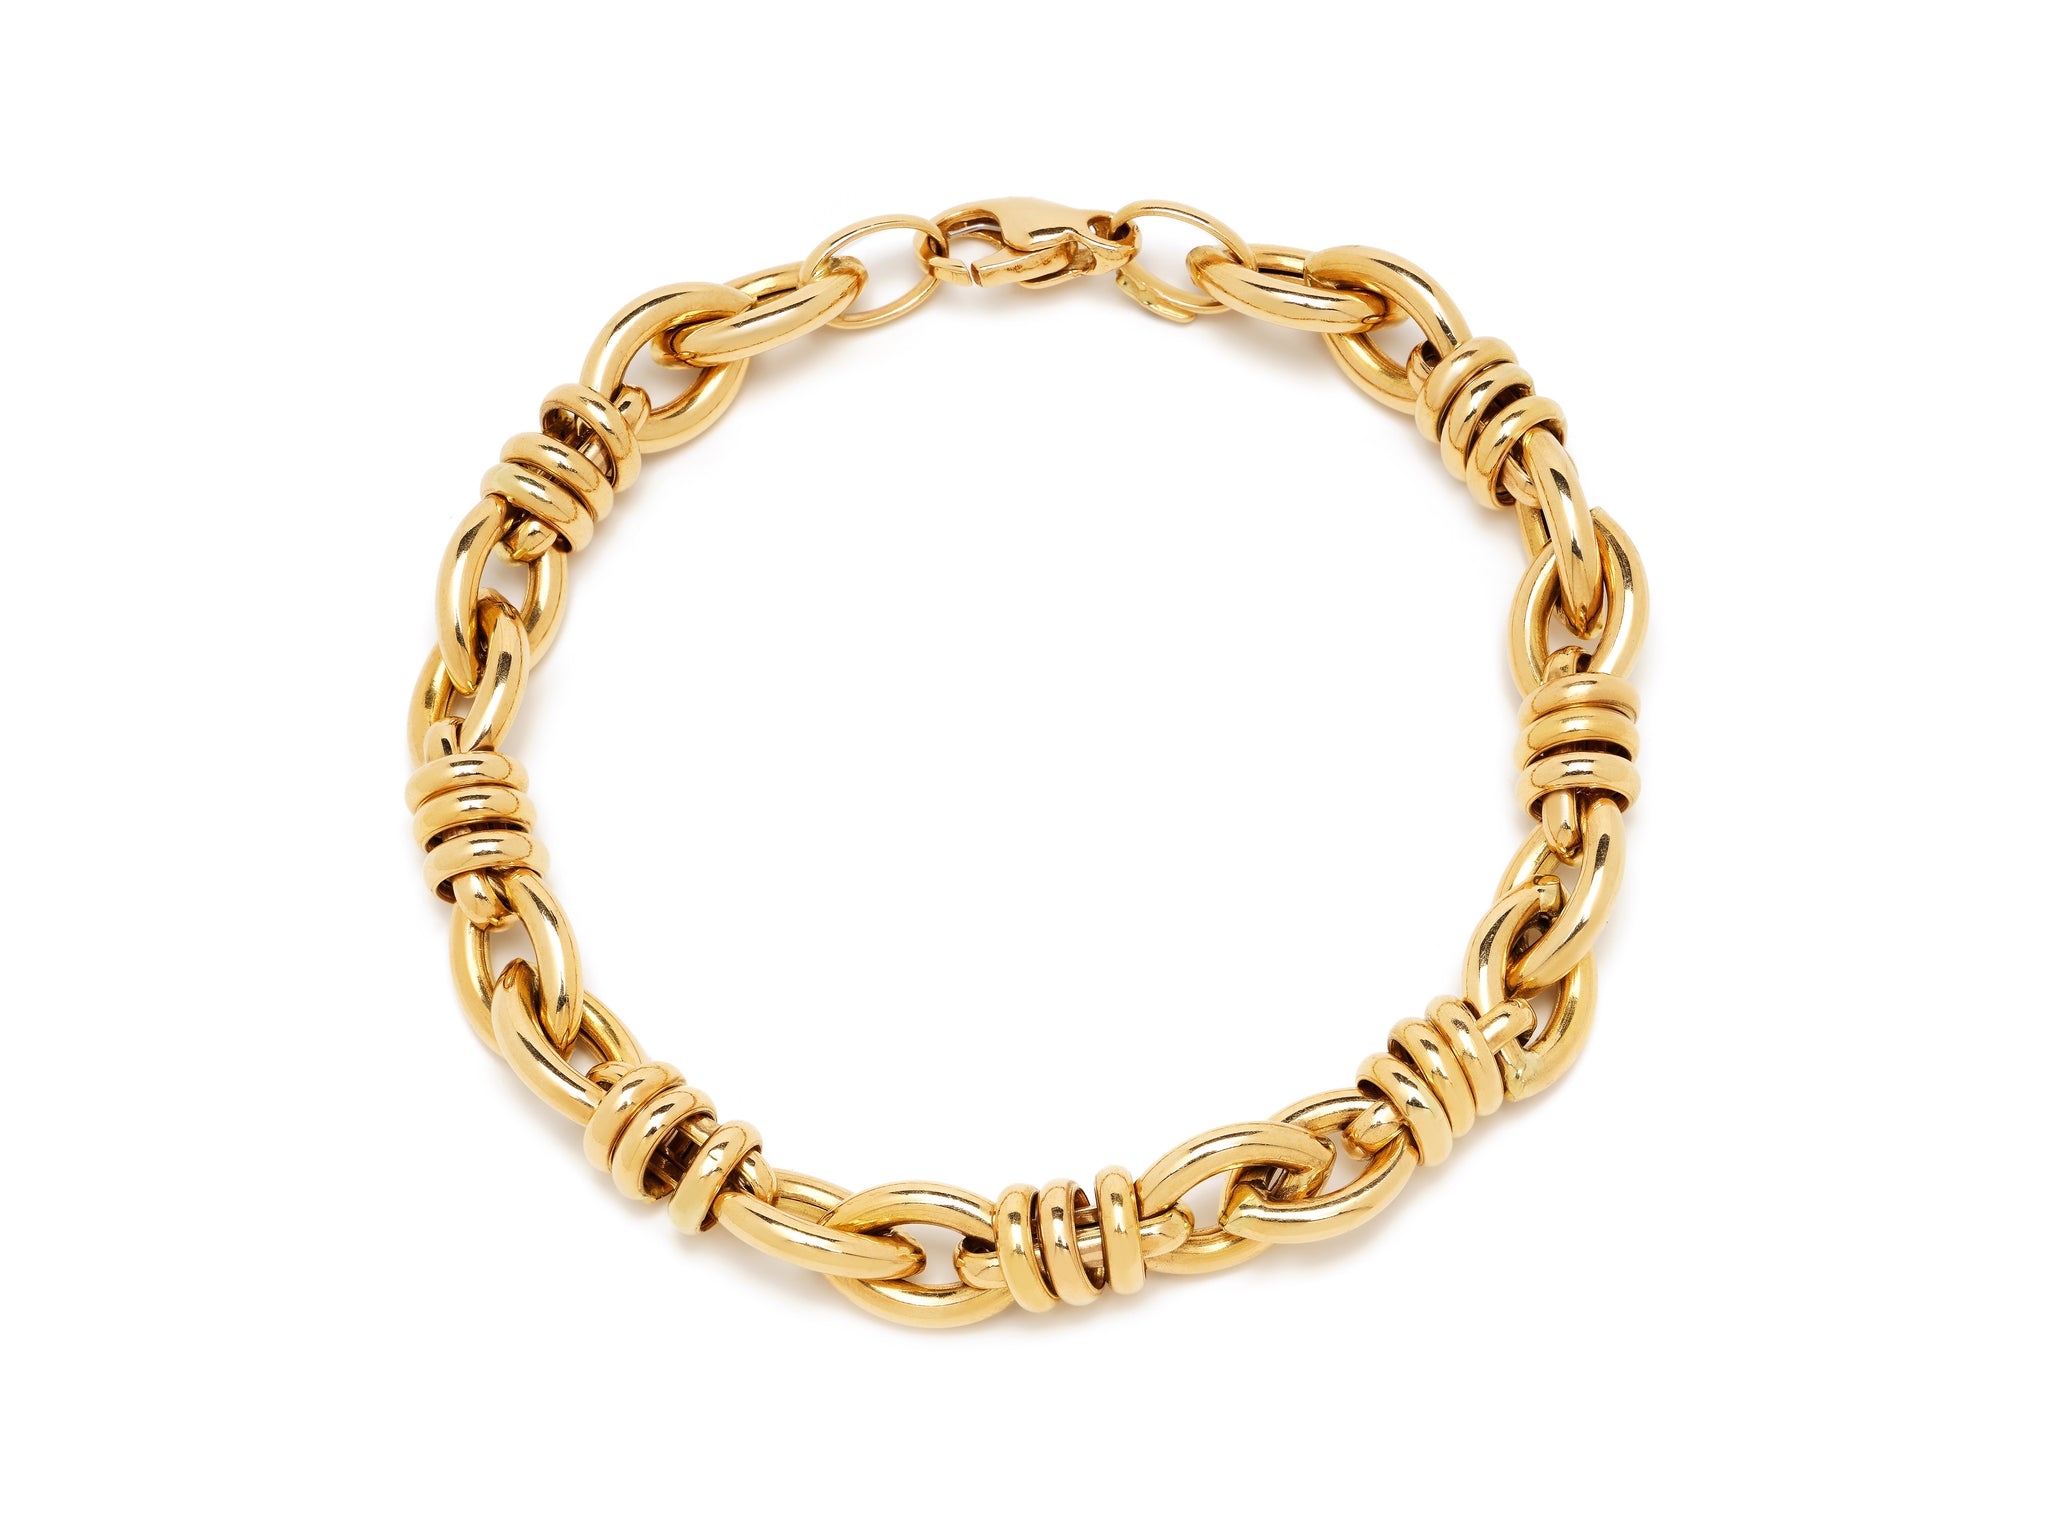 18 krt yellow gold fantasy link bracelet